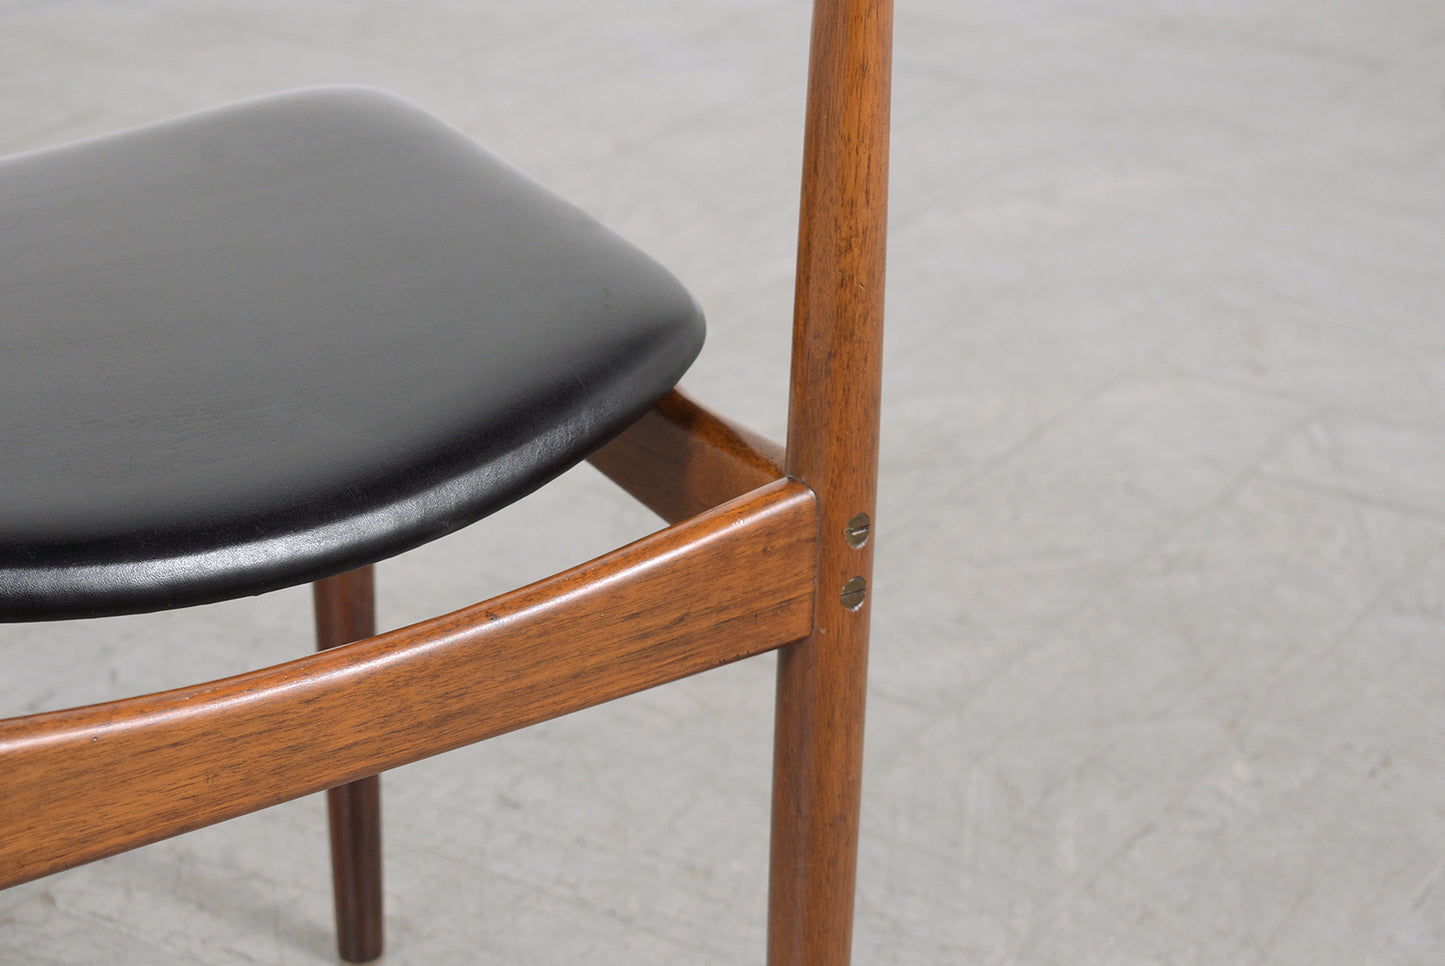 Vintage 1960 Danish Mid-Century Modern Leather Chair